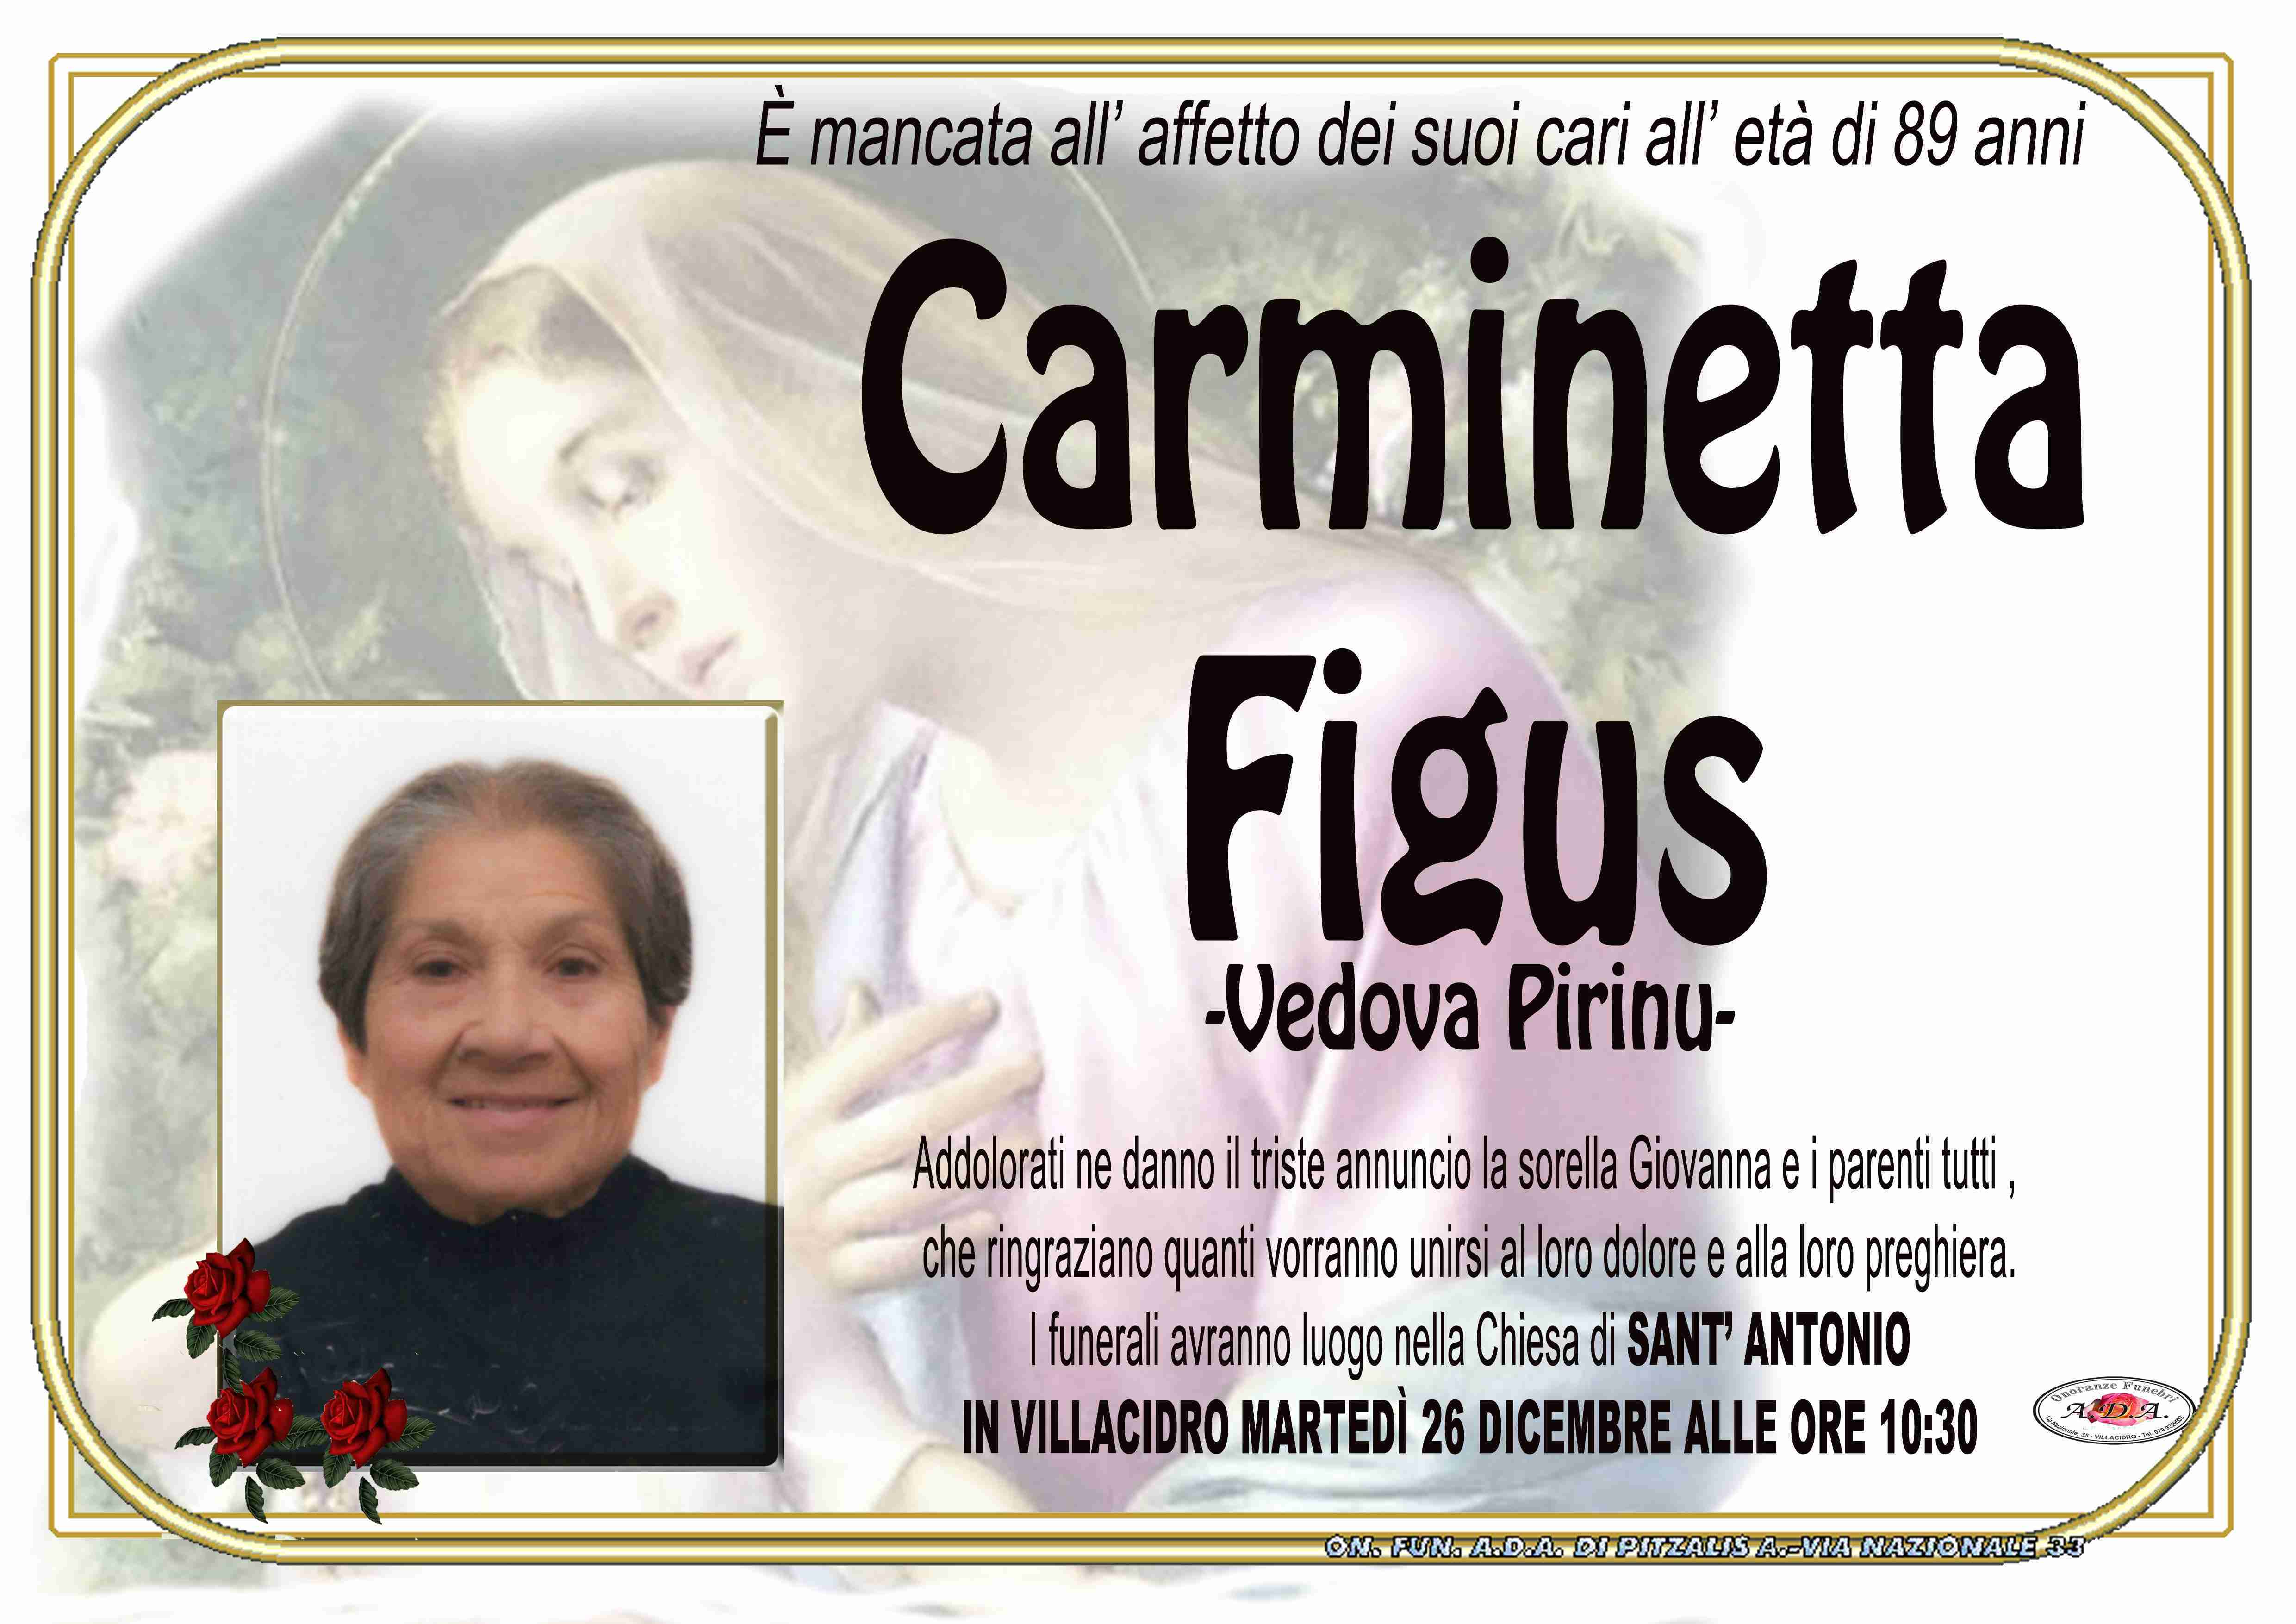 Carminetta Figus